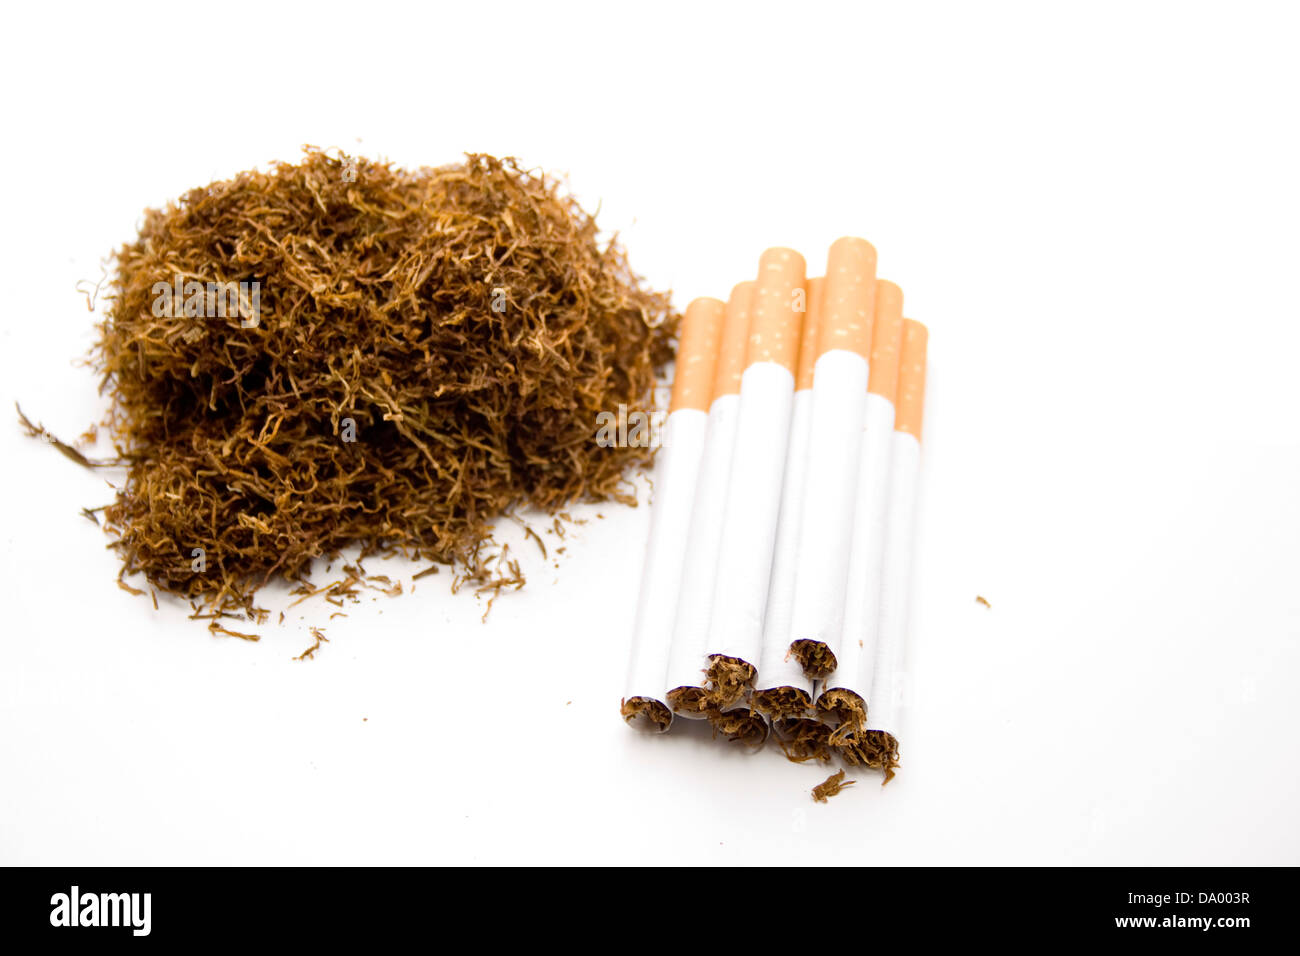 Tobacco with cigarettes Stock Photo